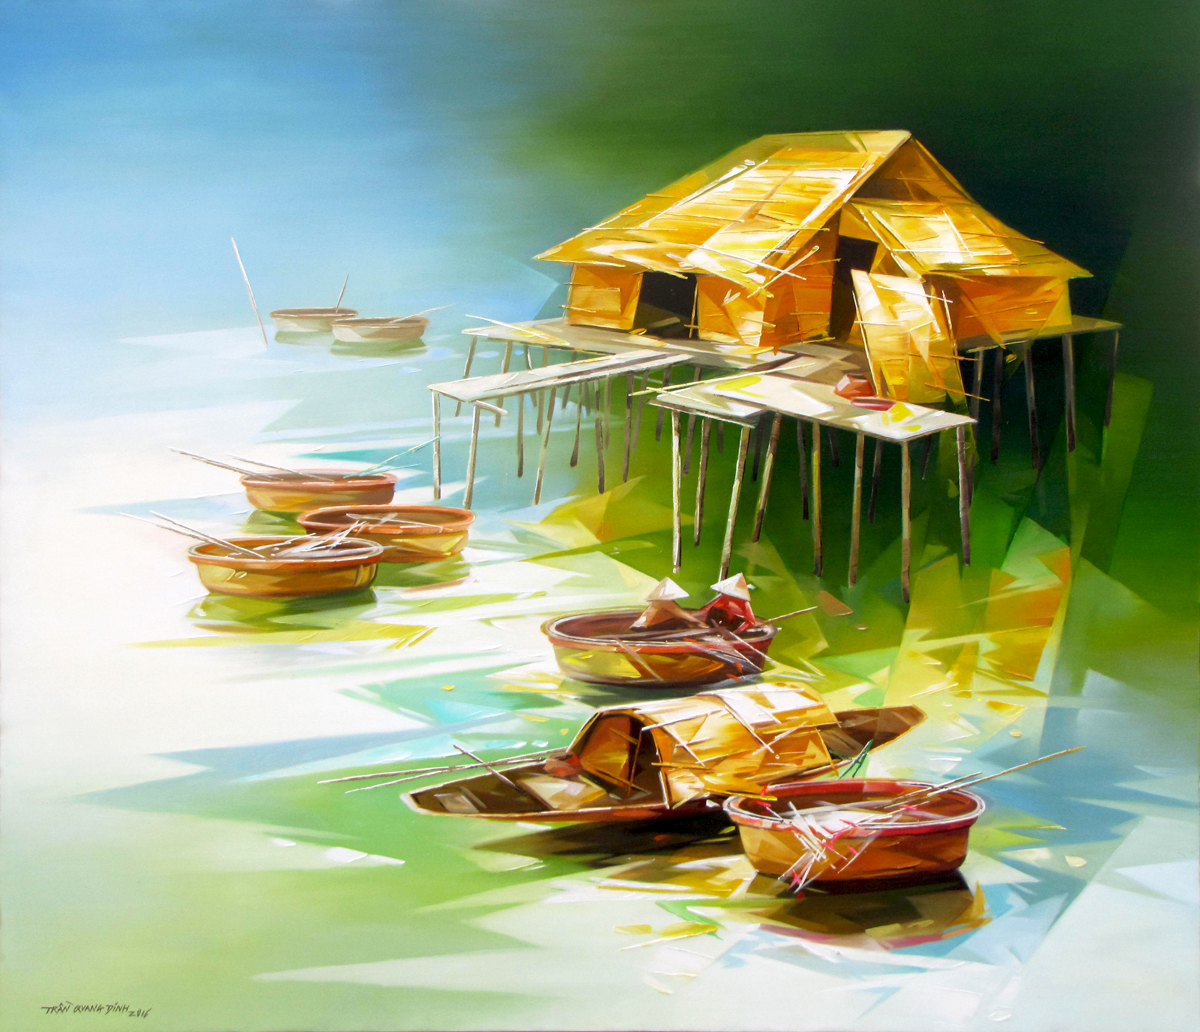 Vietnamese Art-Fishing Village, an Oil Painting on Canvas